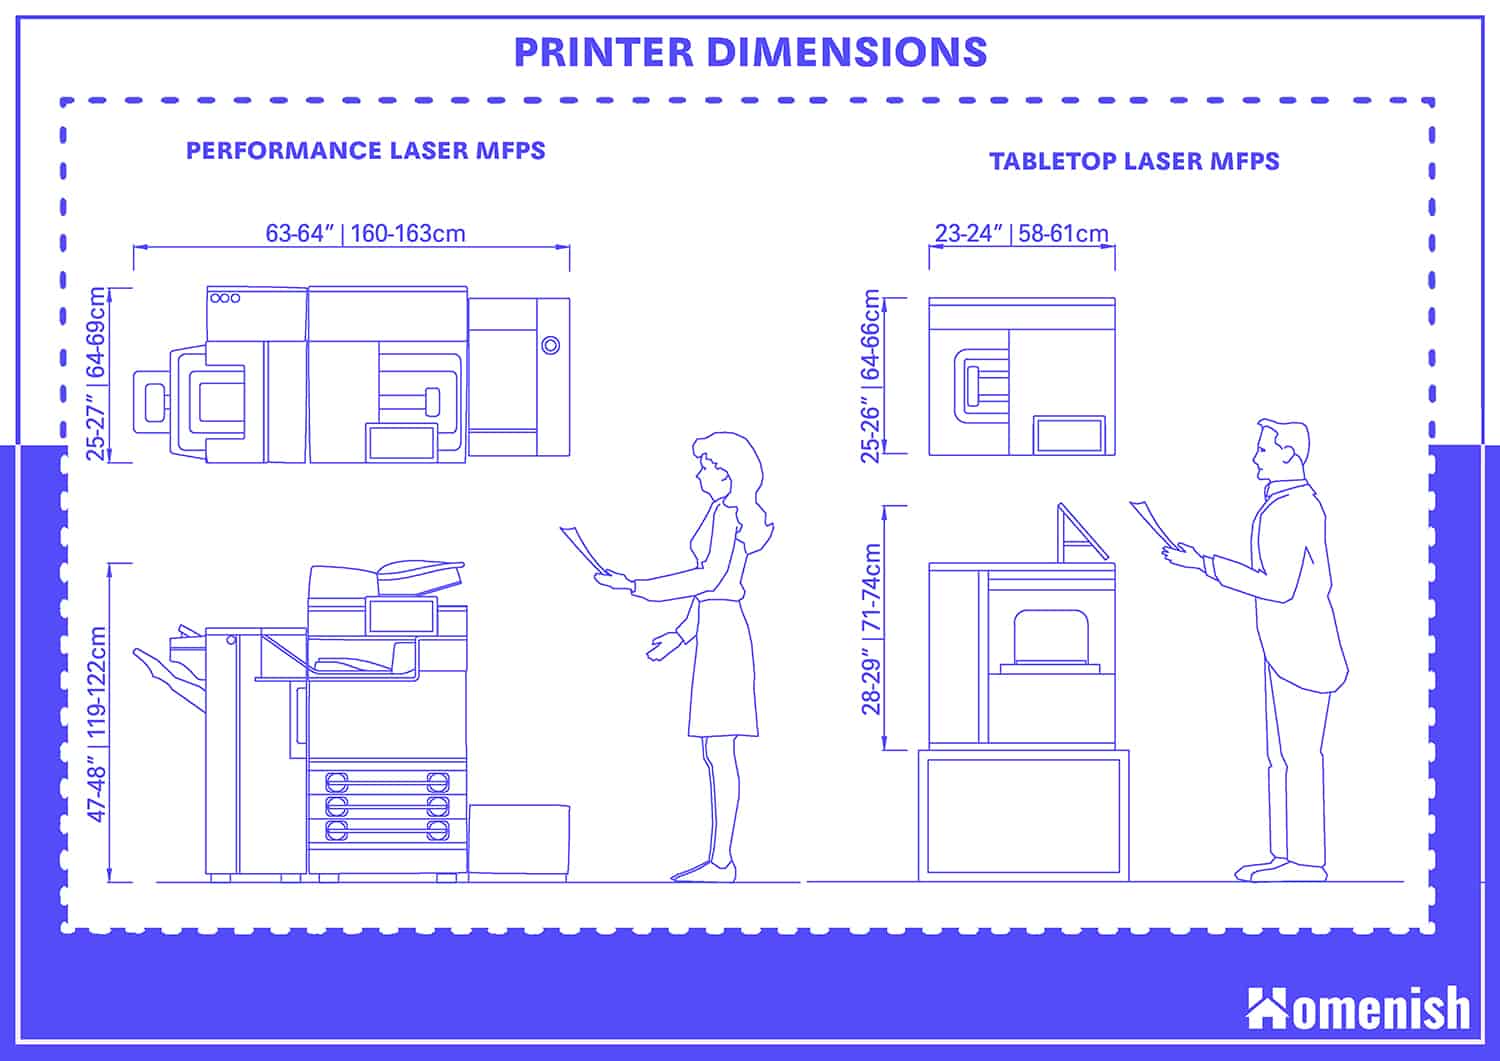 Standard Printer Dimensions